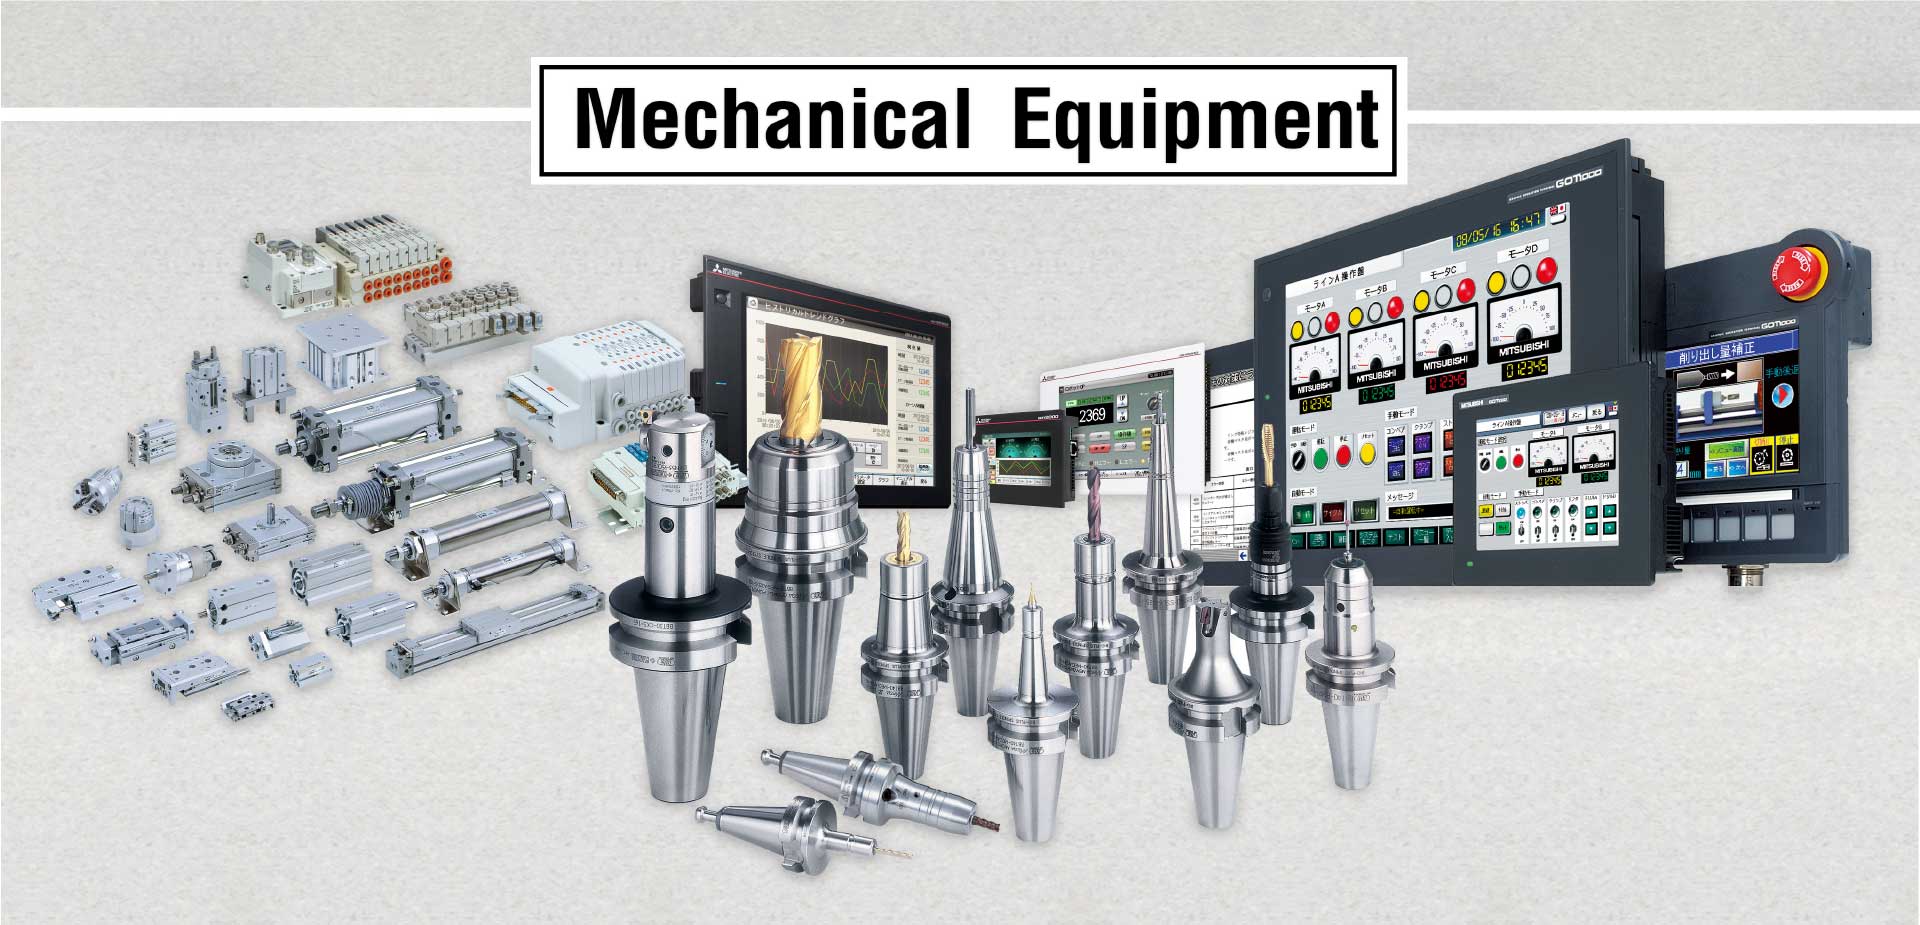 Mechanical Equipment